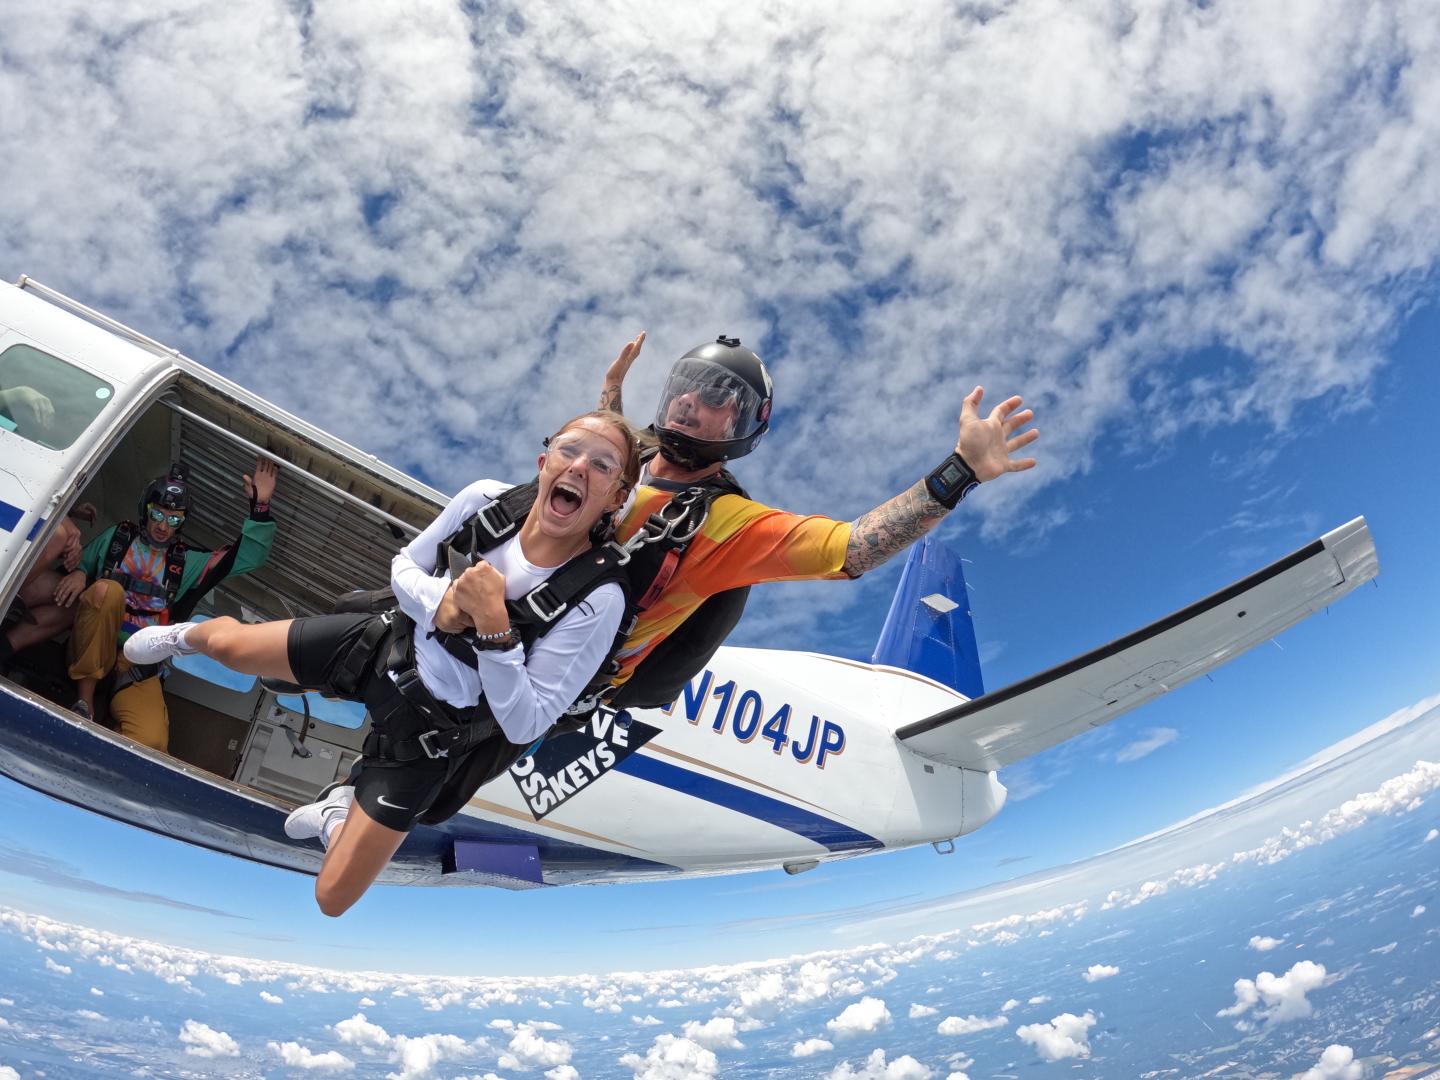 Tandem Skydiving at Skydive Cross Keys - https://www.skydivecrosskeys.com/